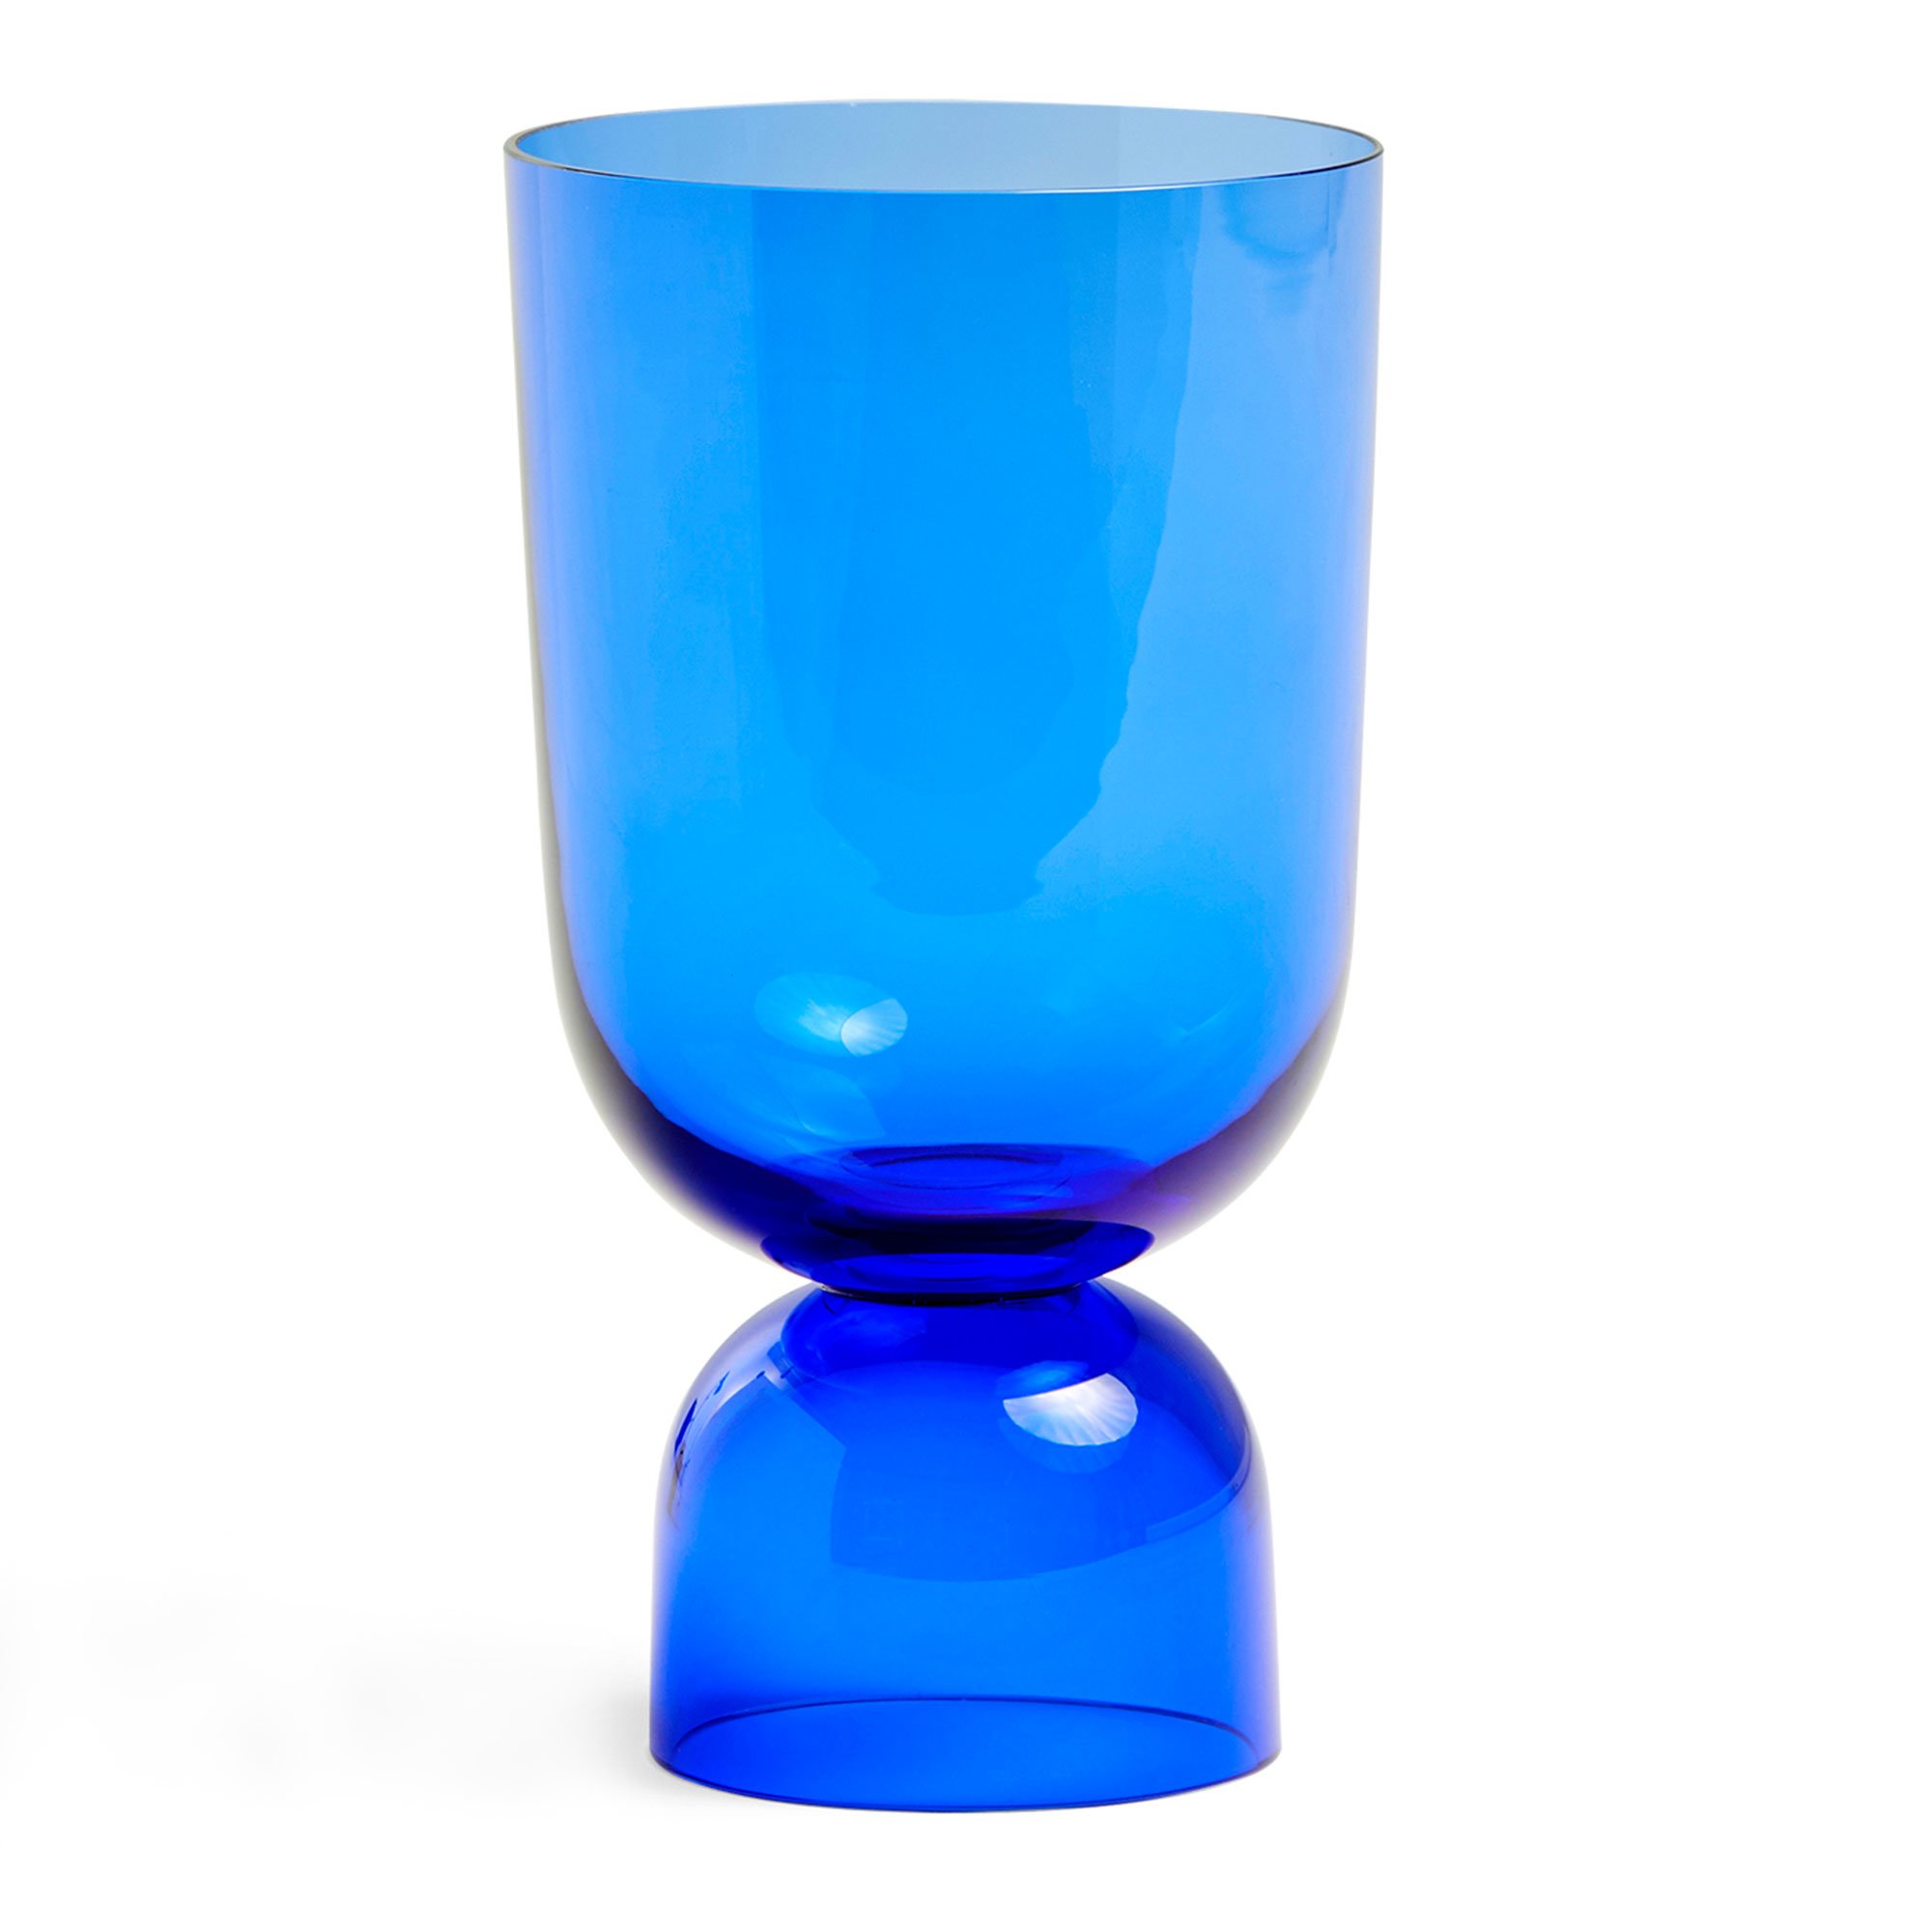 HAY Bottoms Up vas electric blue